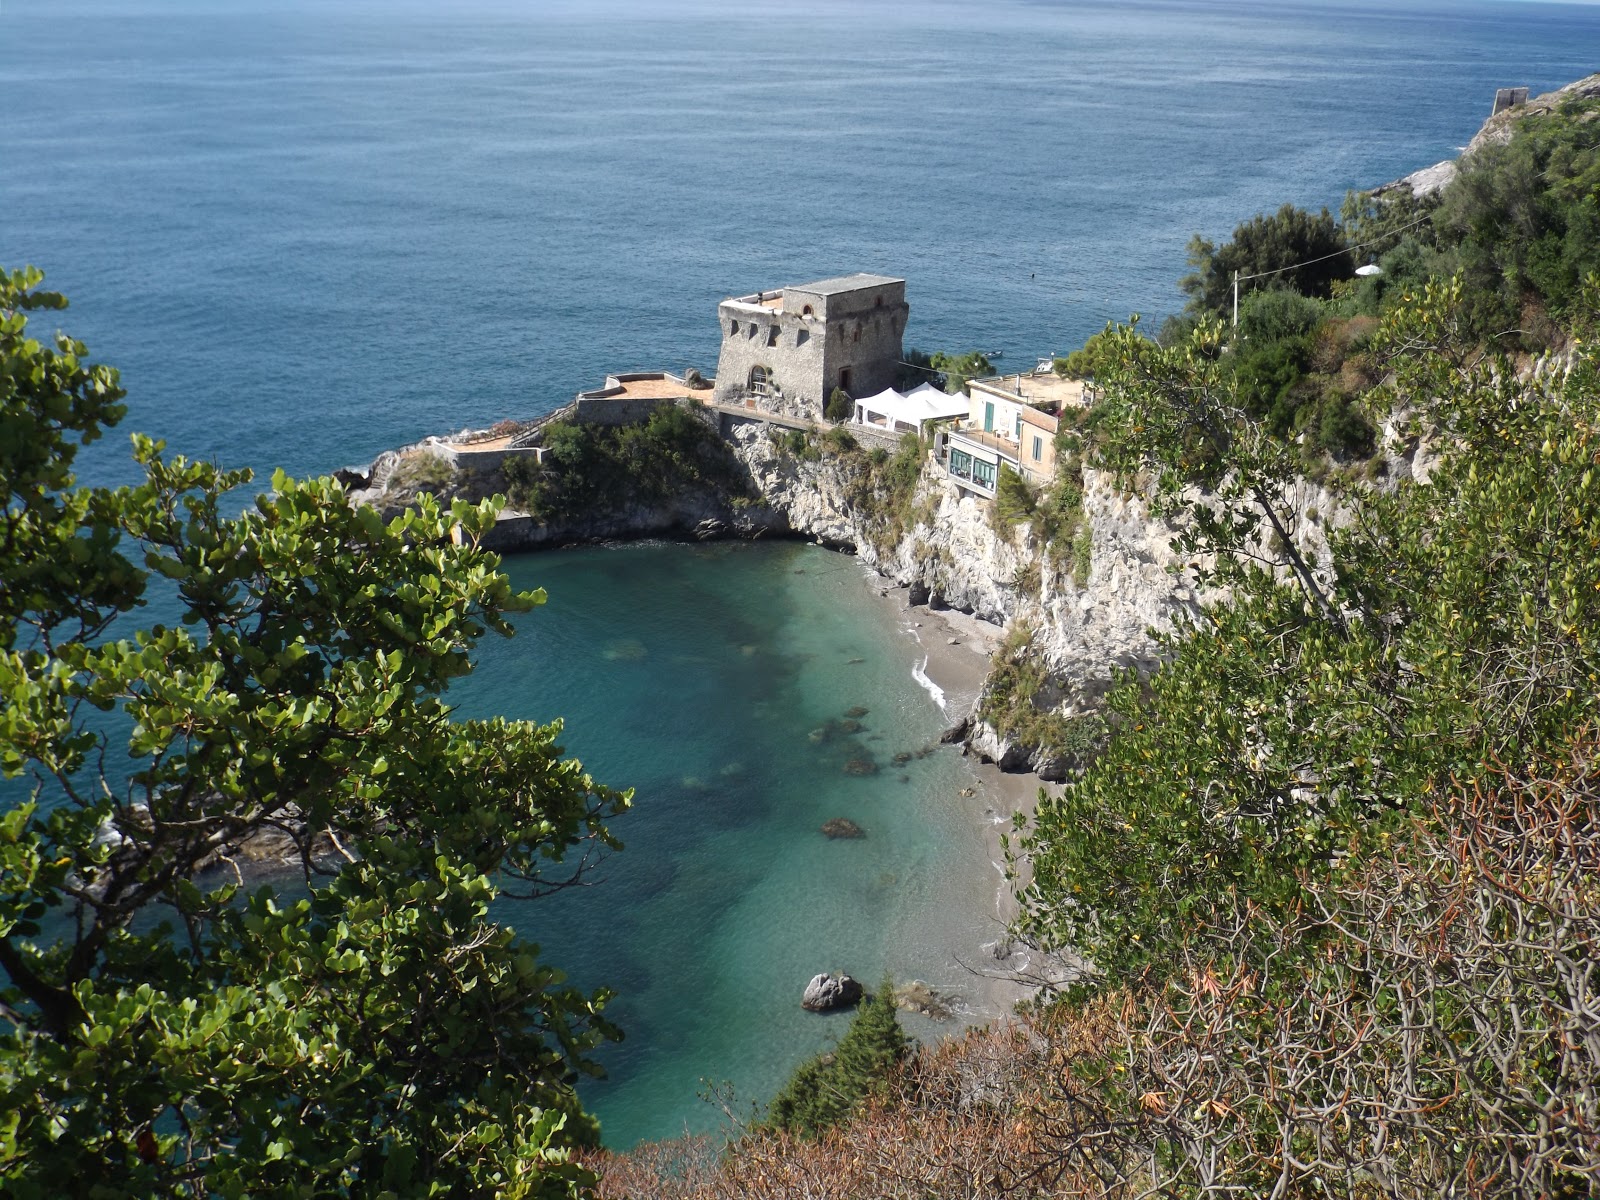 Photo of Spiaggia del Cauco with gray fine pebble surface